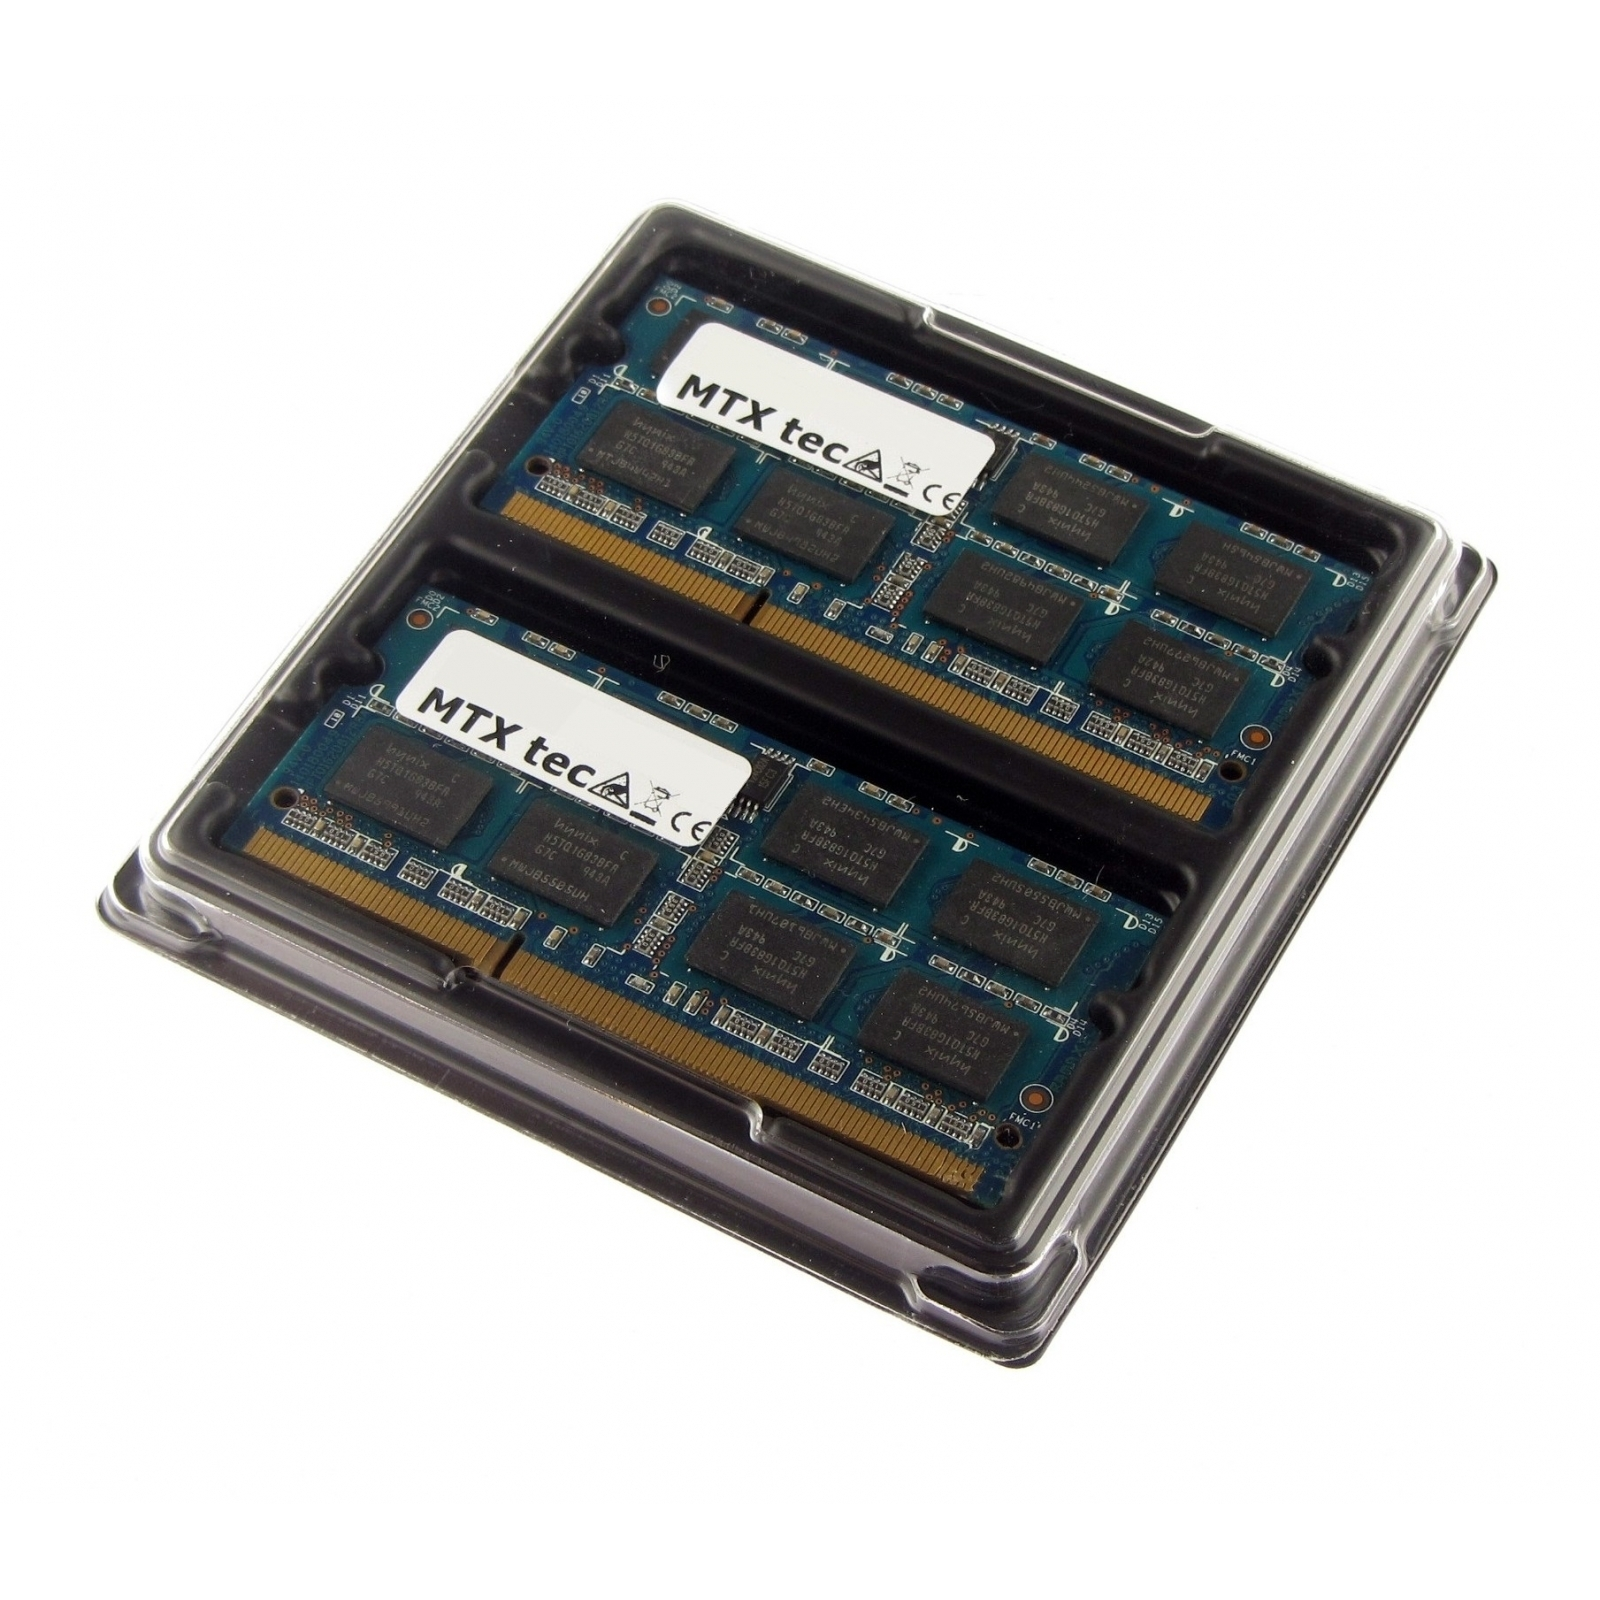 MTXTEC 16GB PC3-12800, Notebook-Speicher DDR3L SODIMM 204 DDR3 1600MHz 8GB 8 GB Pin, DDR3 Kit 2x 1.35V RAM Laptop-Speicher